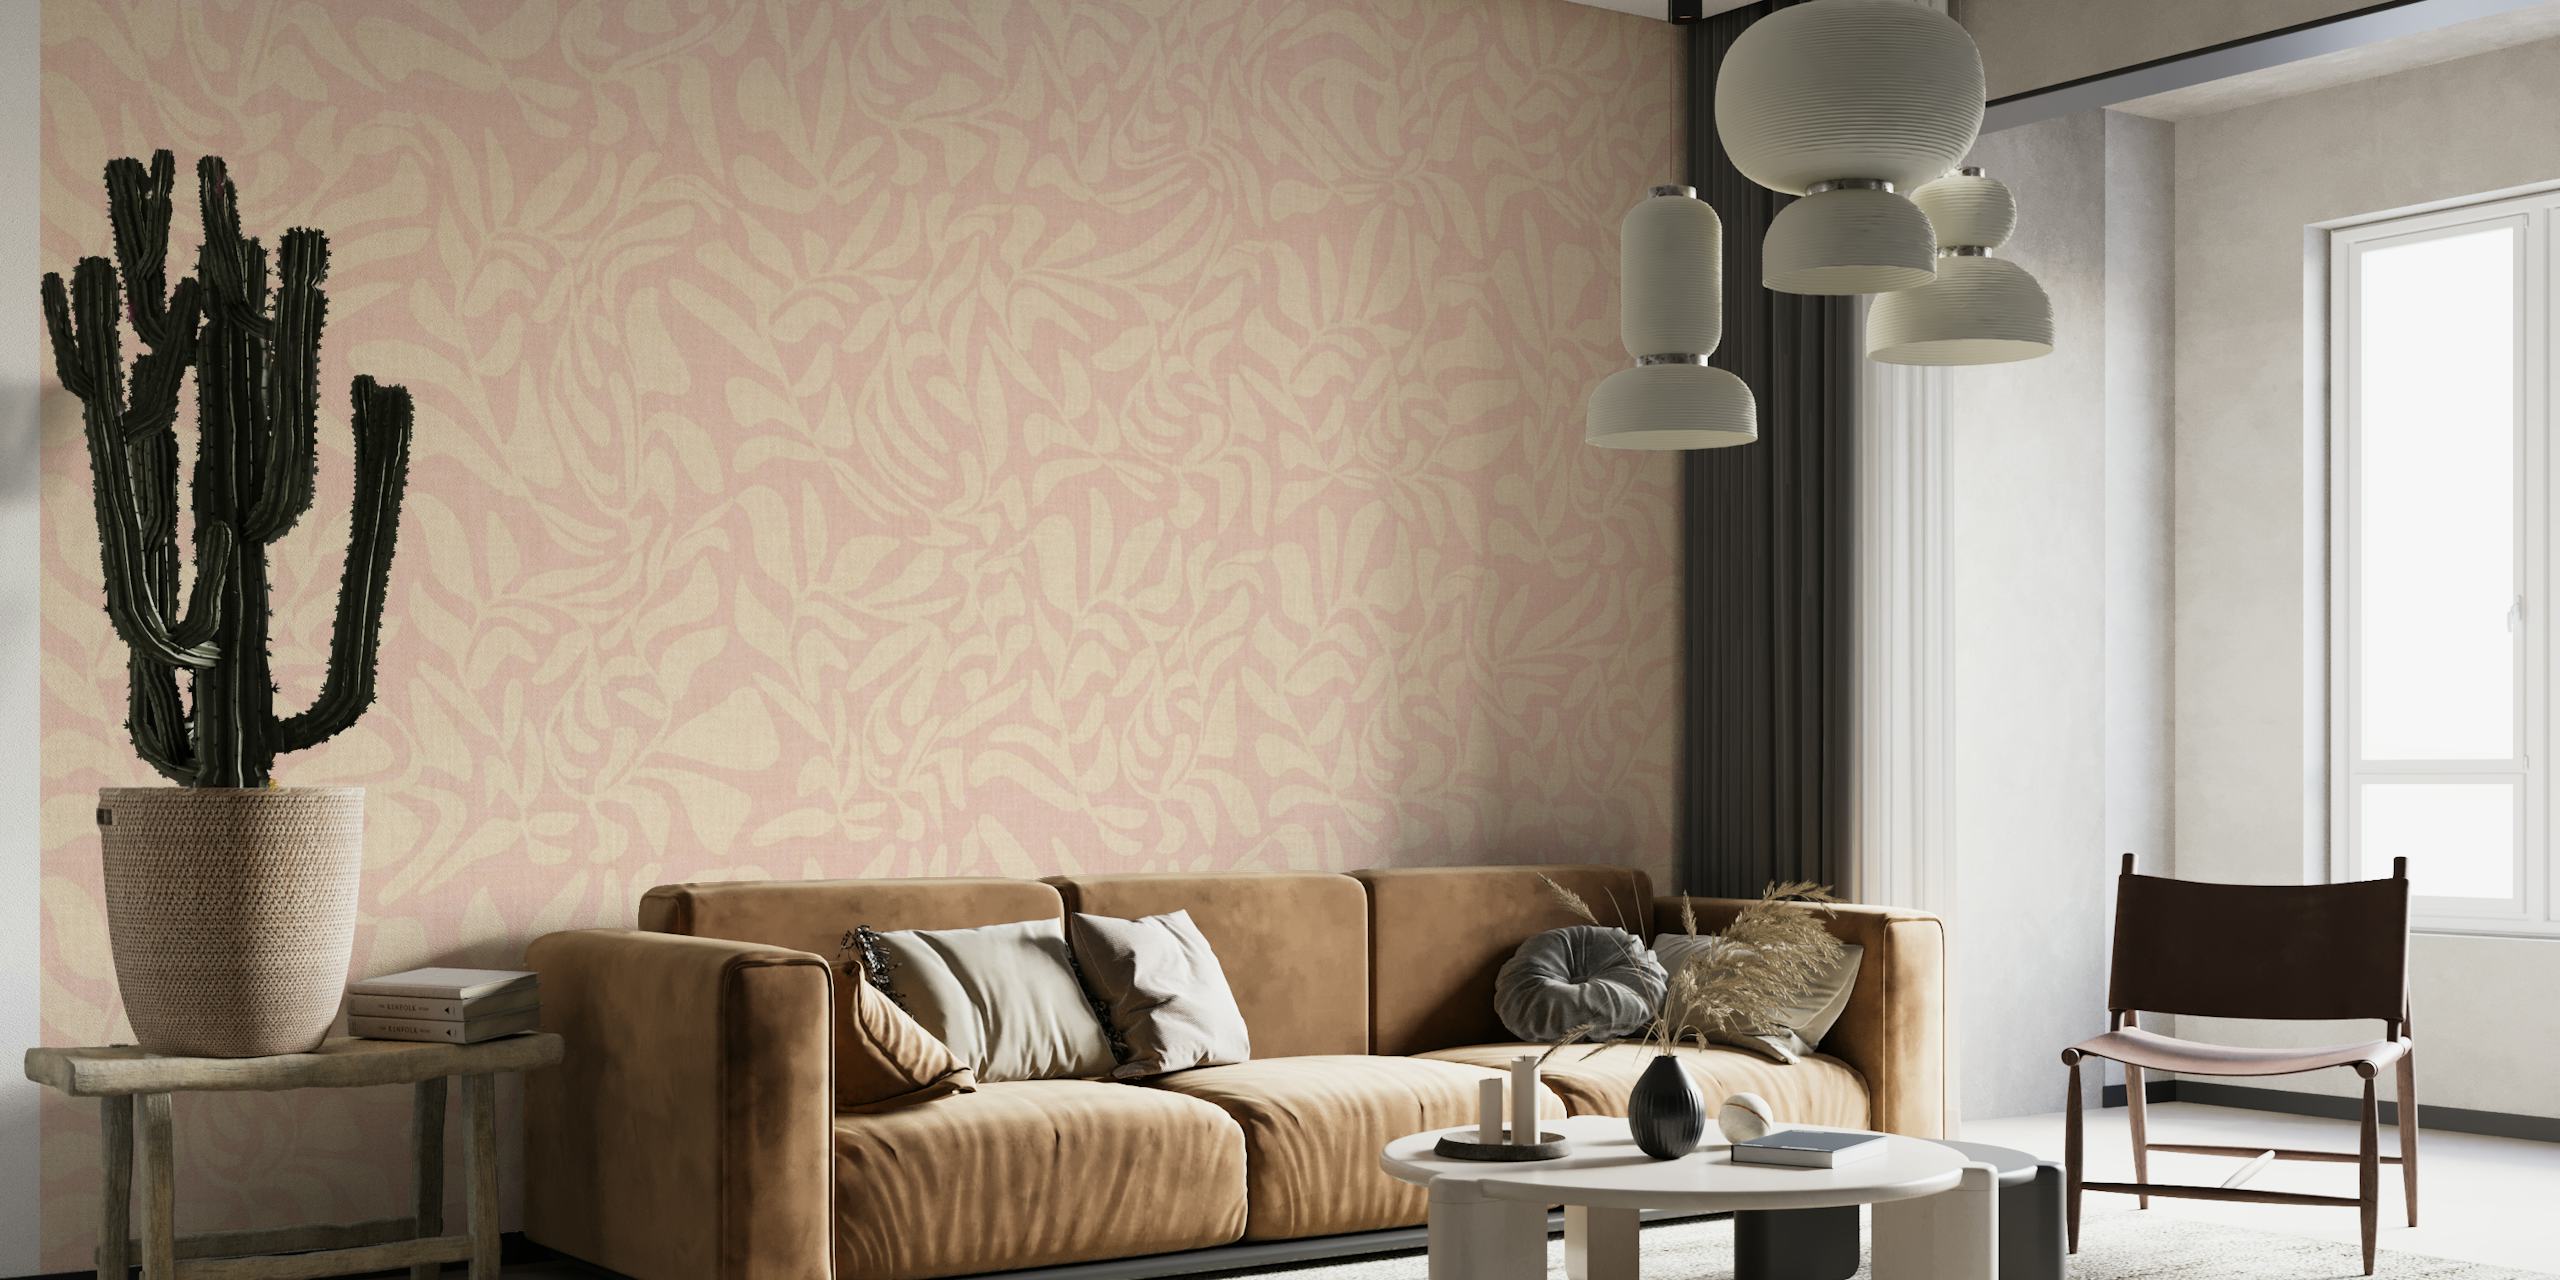 Leaves swirls in blush pink wallpaper